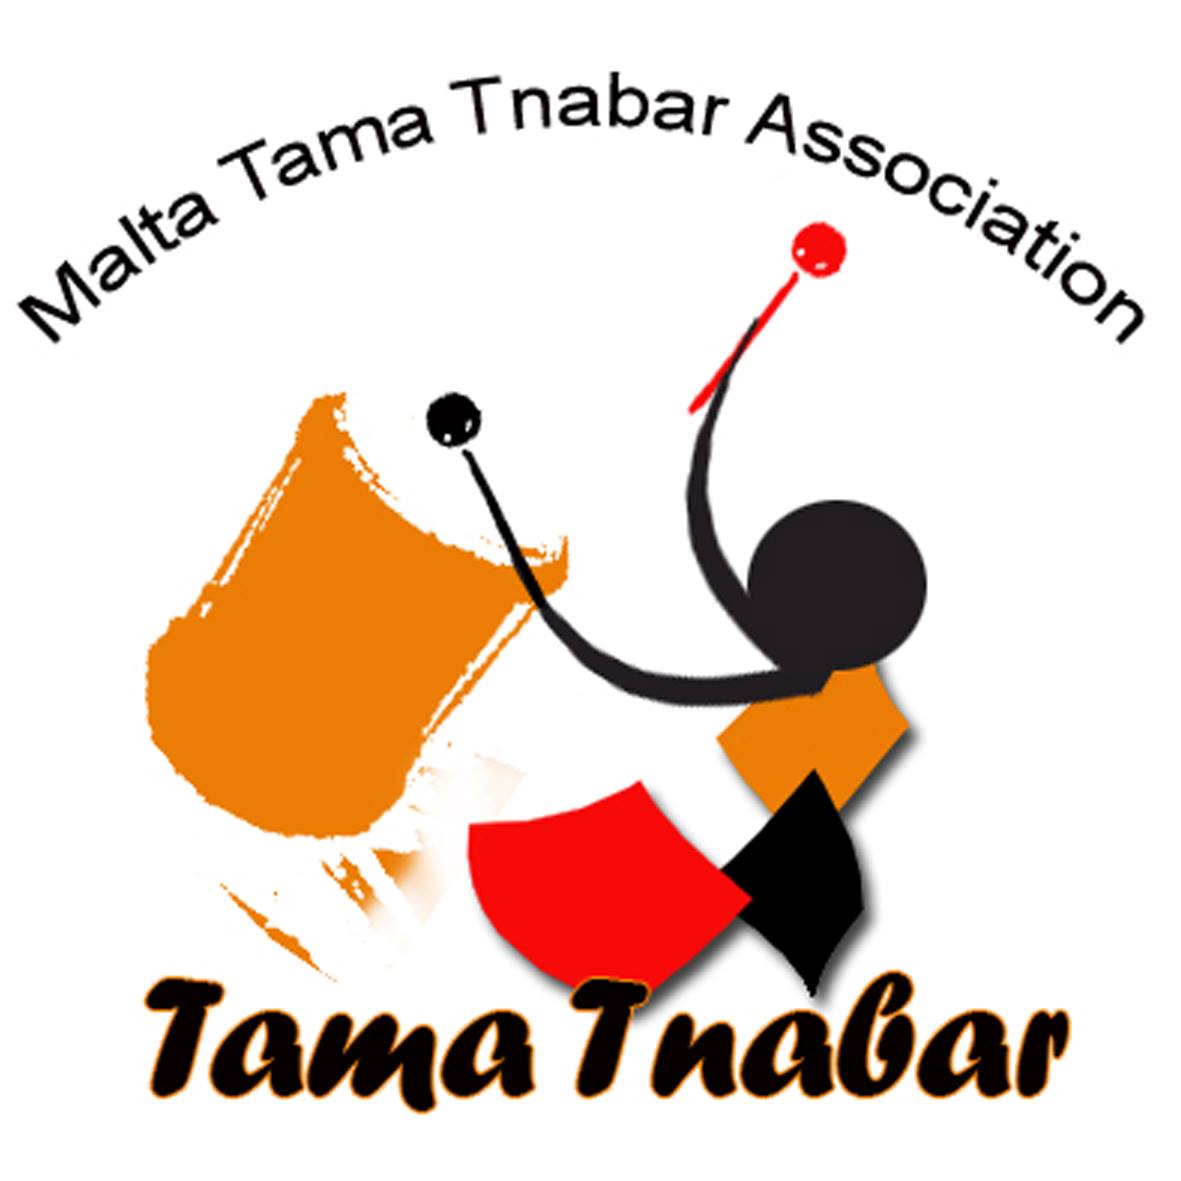 malta tama tnabar association logo